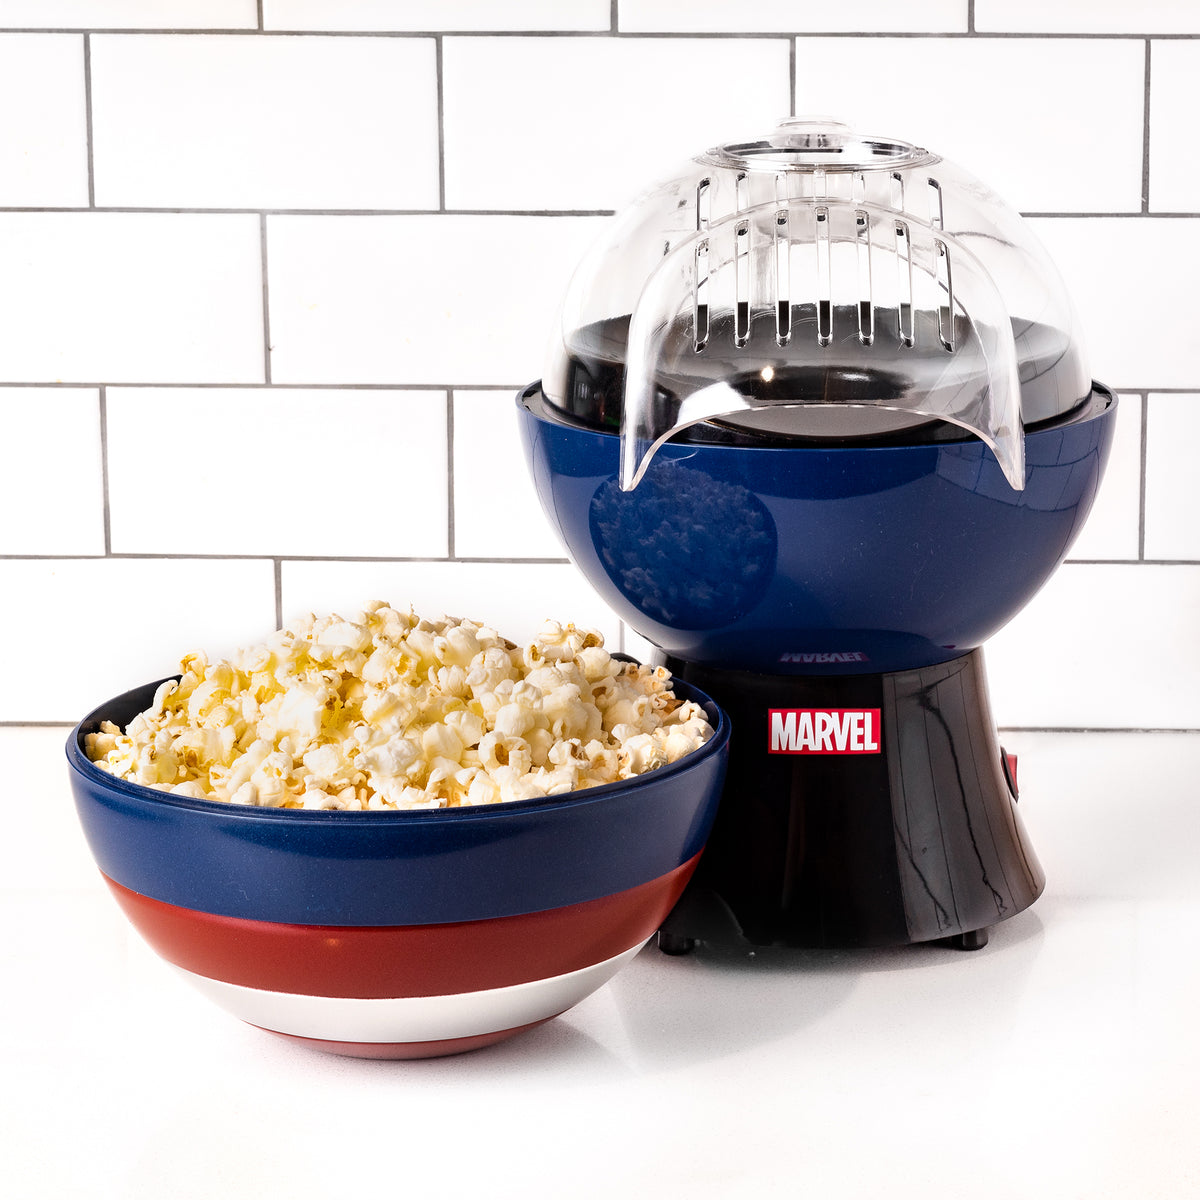 Star Wars Death Star Hot Air Popcorn Maker